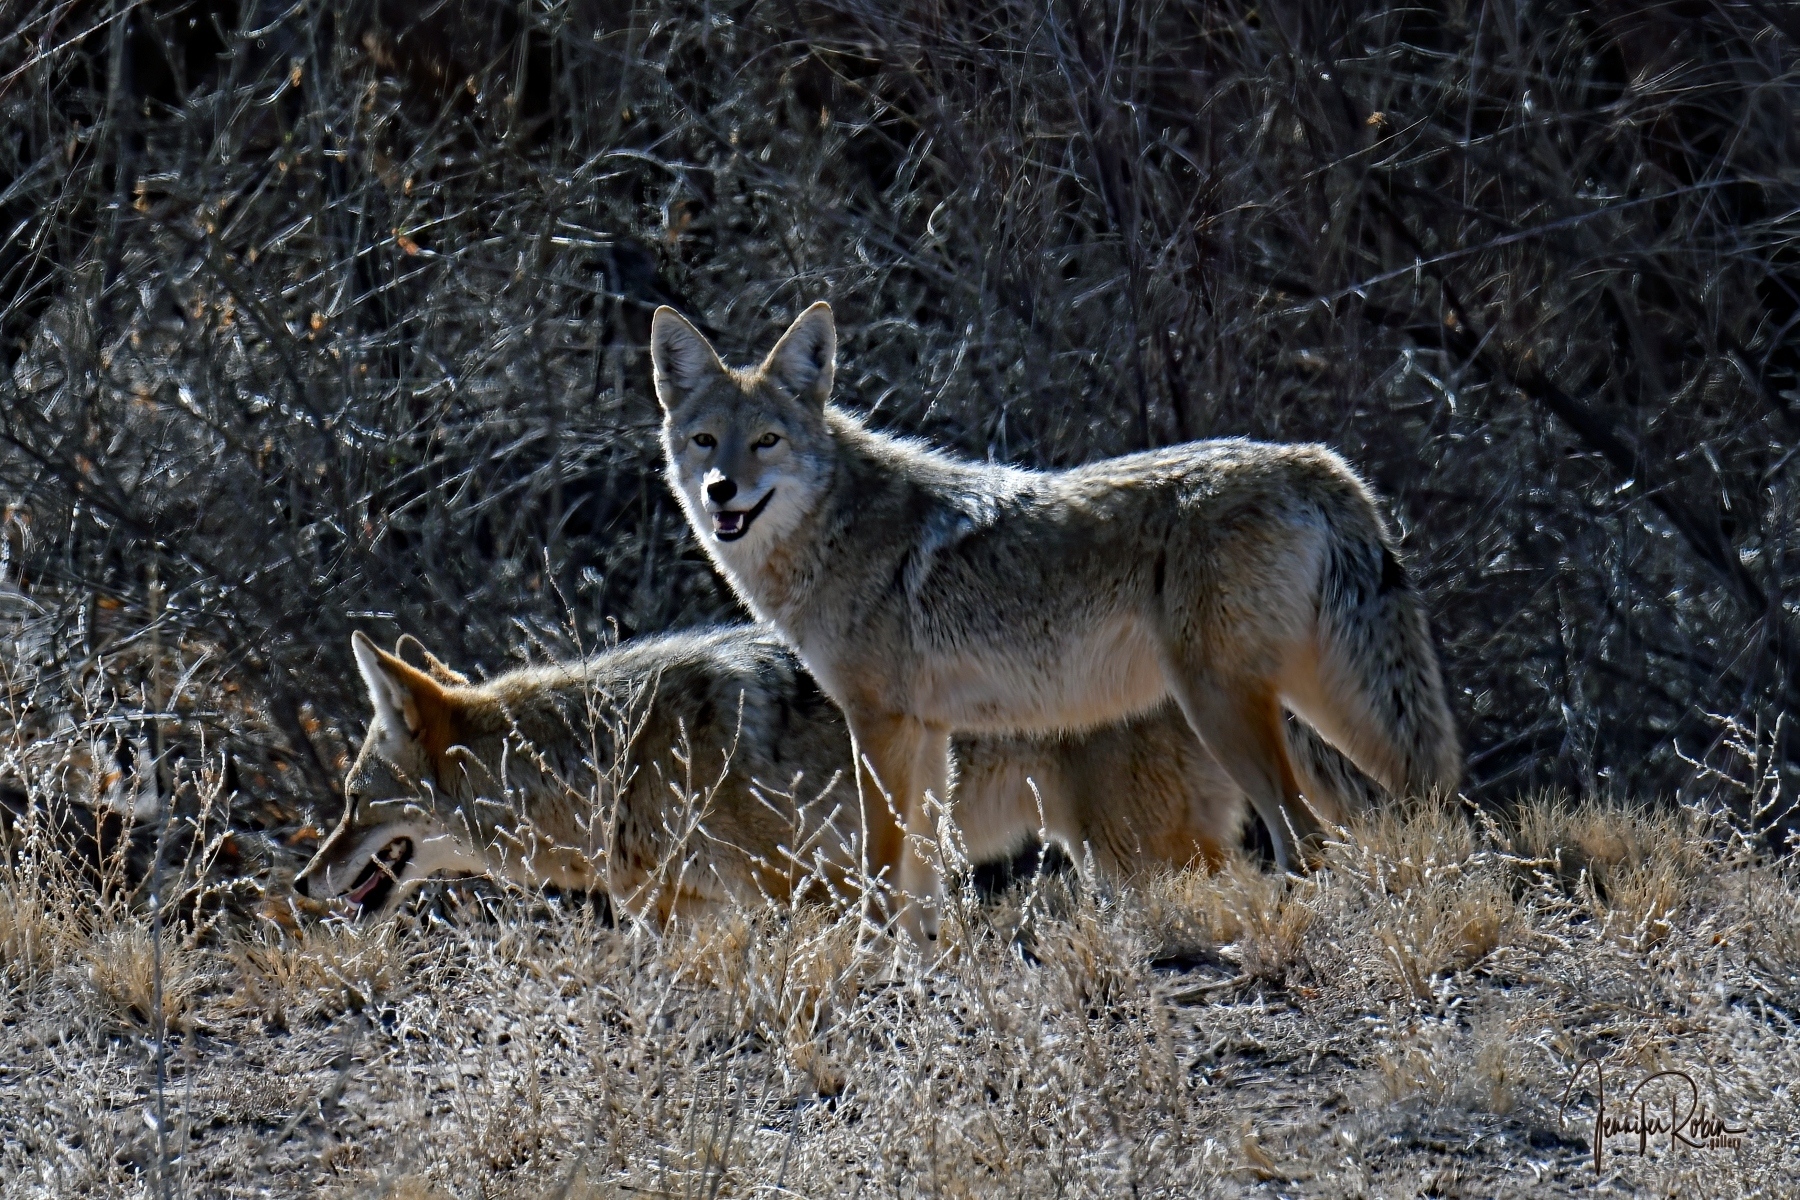 A pair of coyotes at Bosque Del Apache